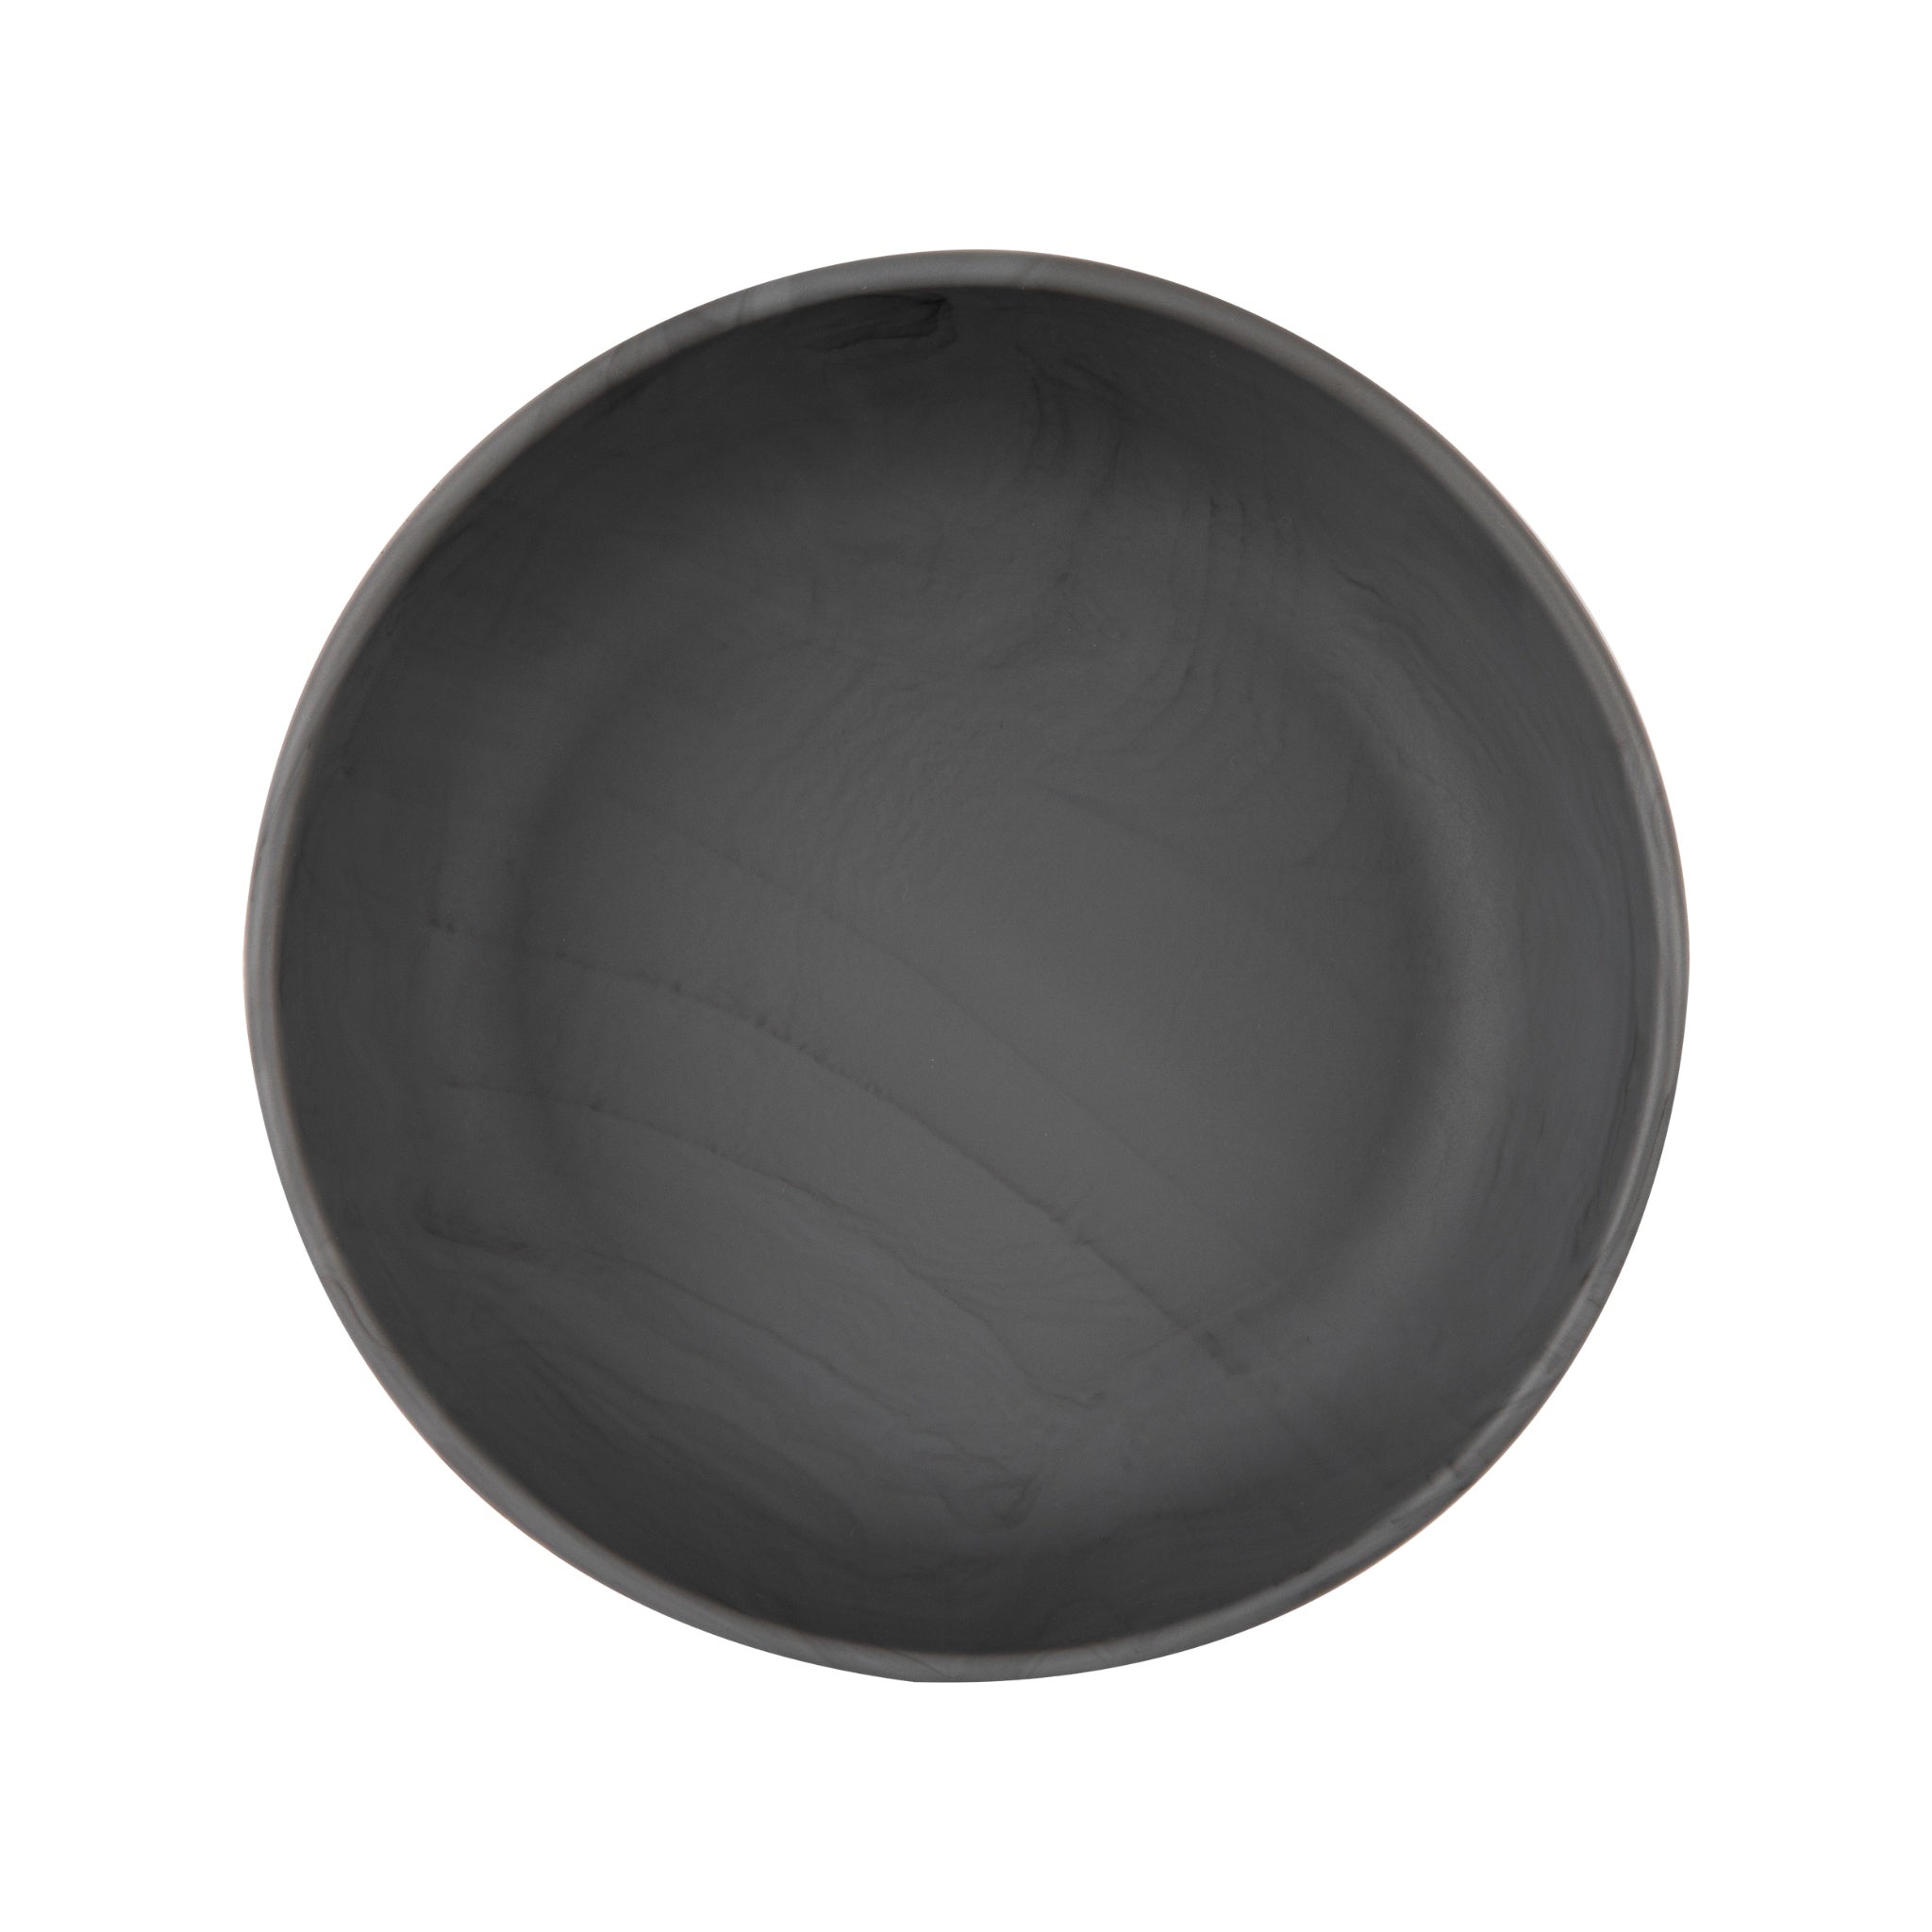 *eeveve* Silicone Bowl large シリコンボウル L - Marble - Granite Gray